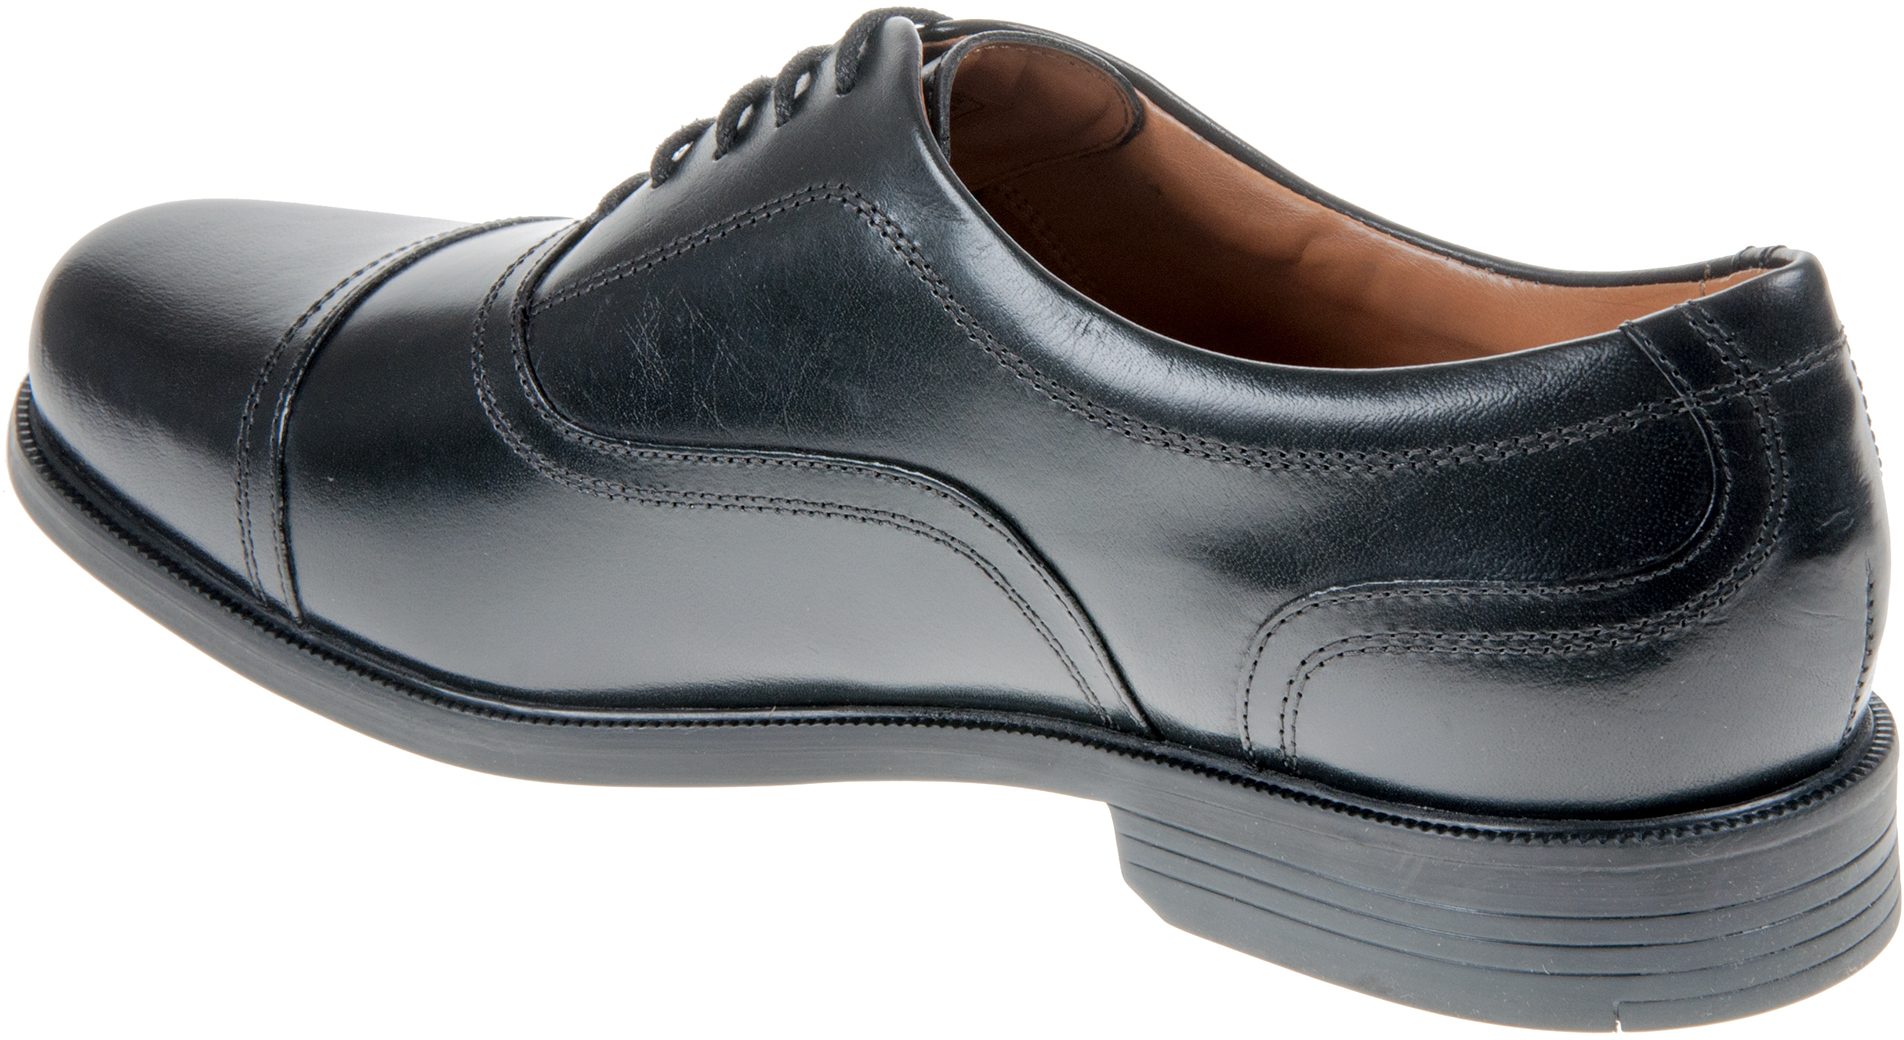 Clarks Beeston Cap Black 26102889 - Formal Shoes - Humphries Shoes